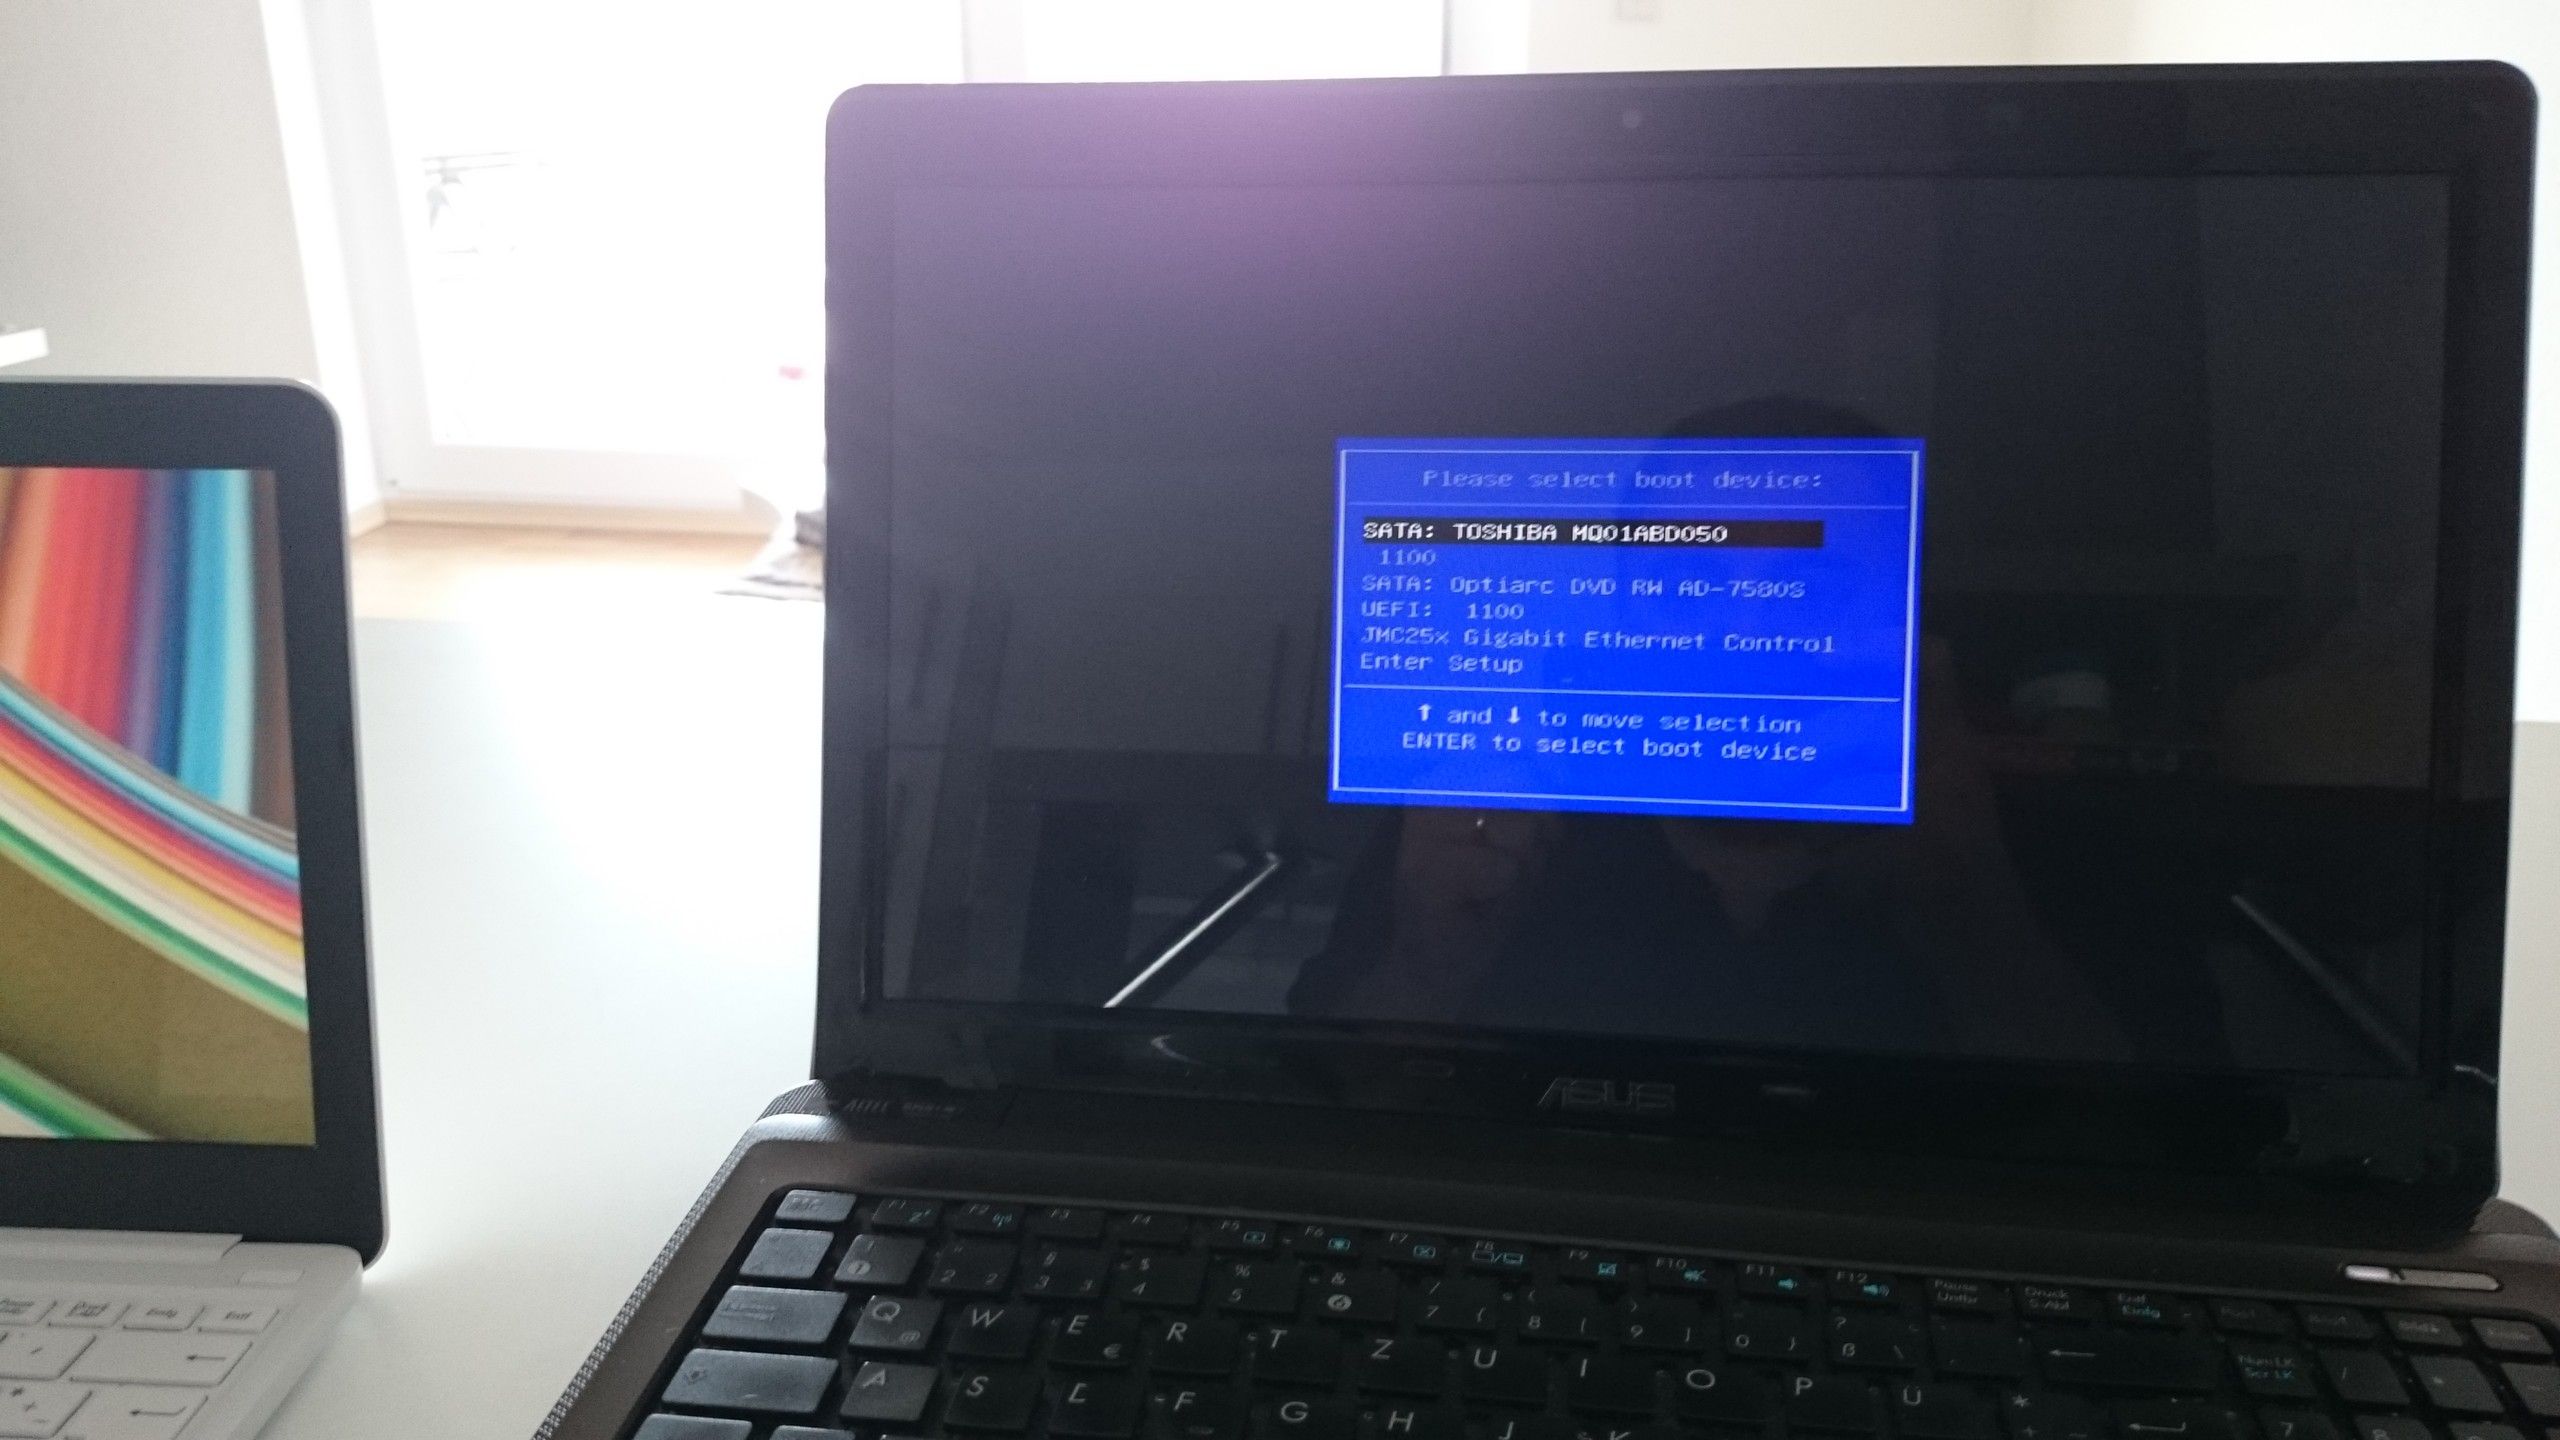 ASUS X52J OS X 10.10.3 boot sorunu - b1f: error